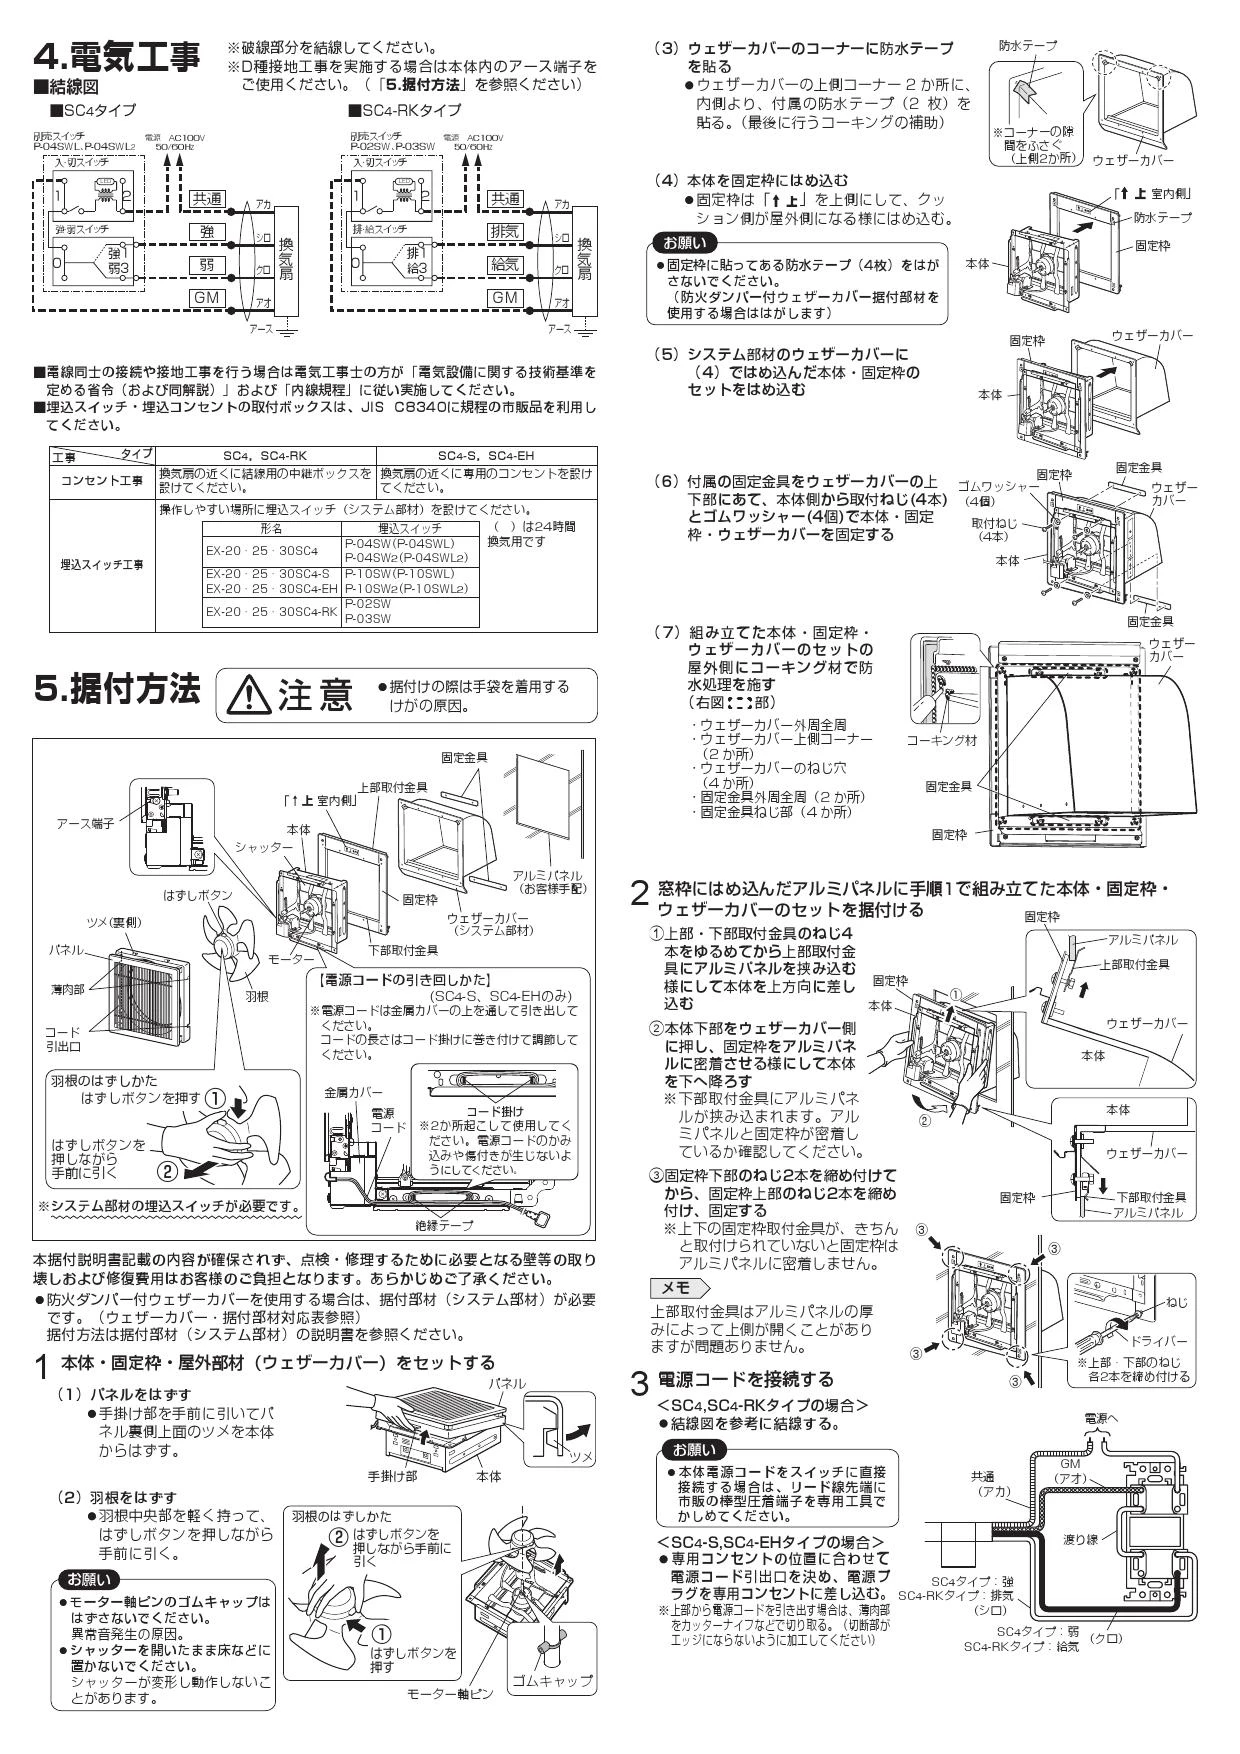 三菱電機 EX-20SC4-S取扱説明書 施工説明書 納入仕様図 | 通販 プロ